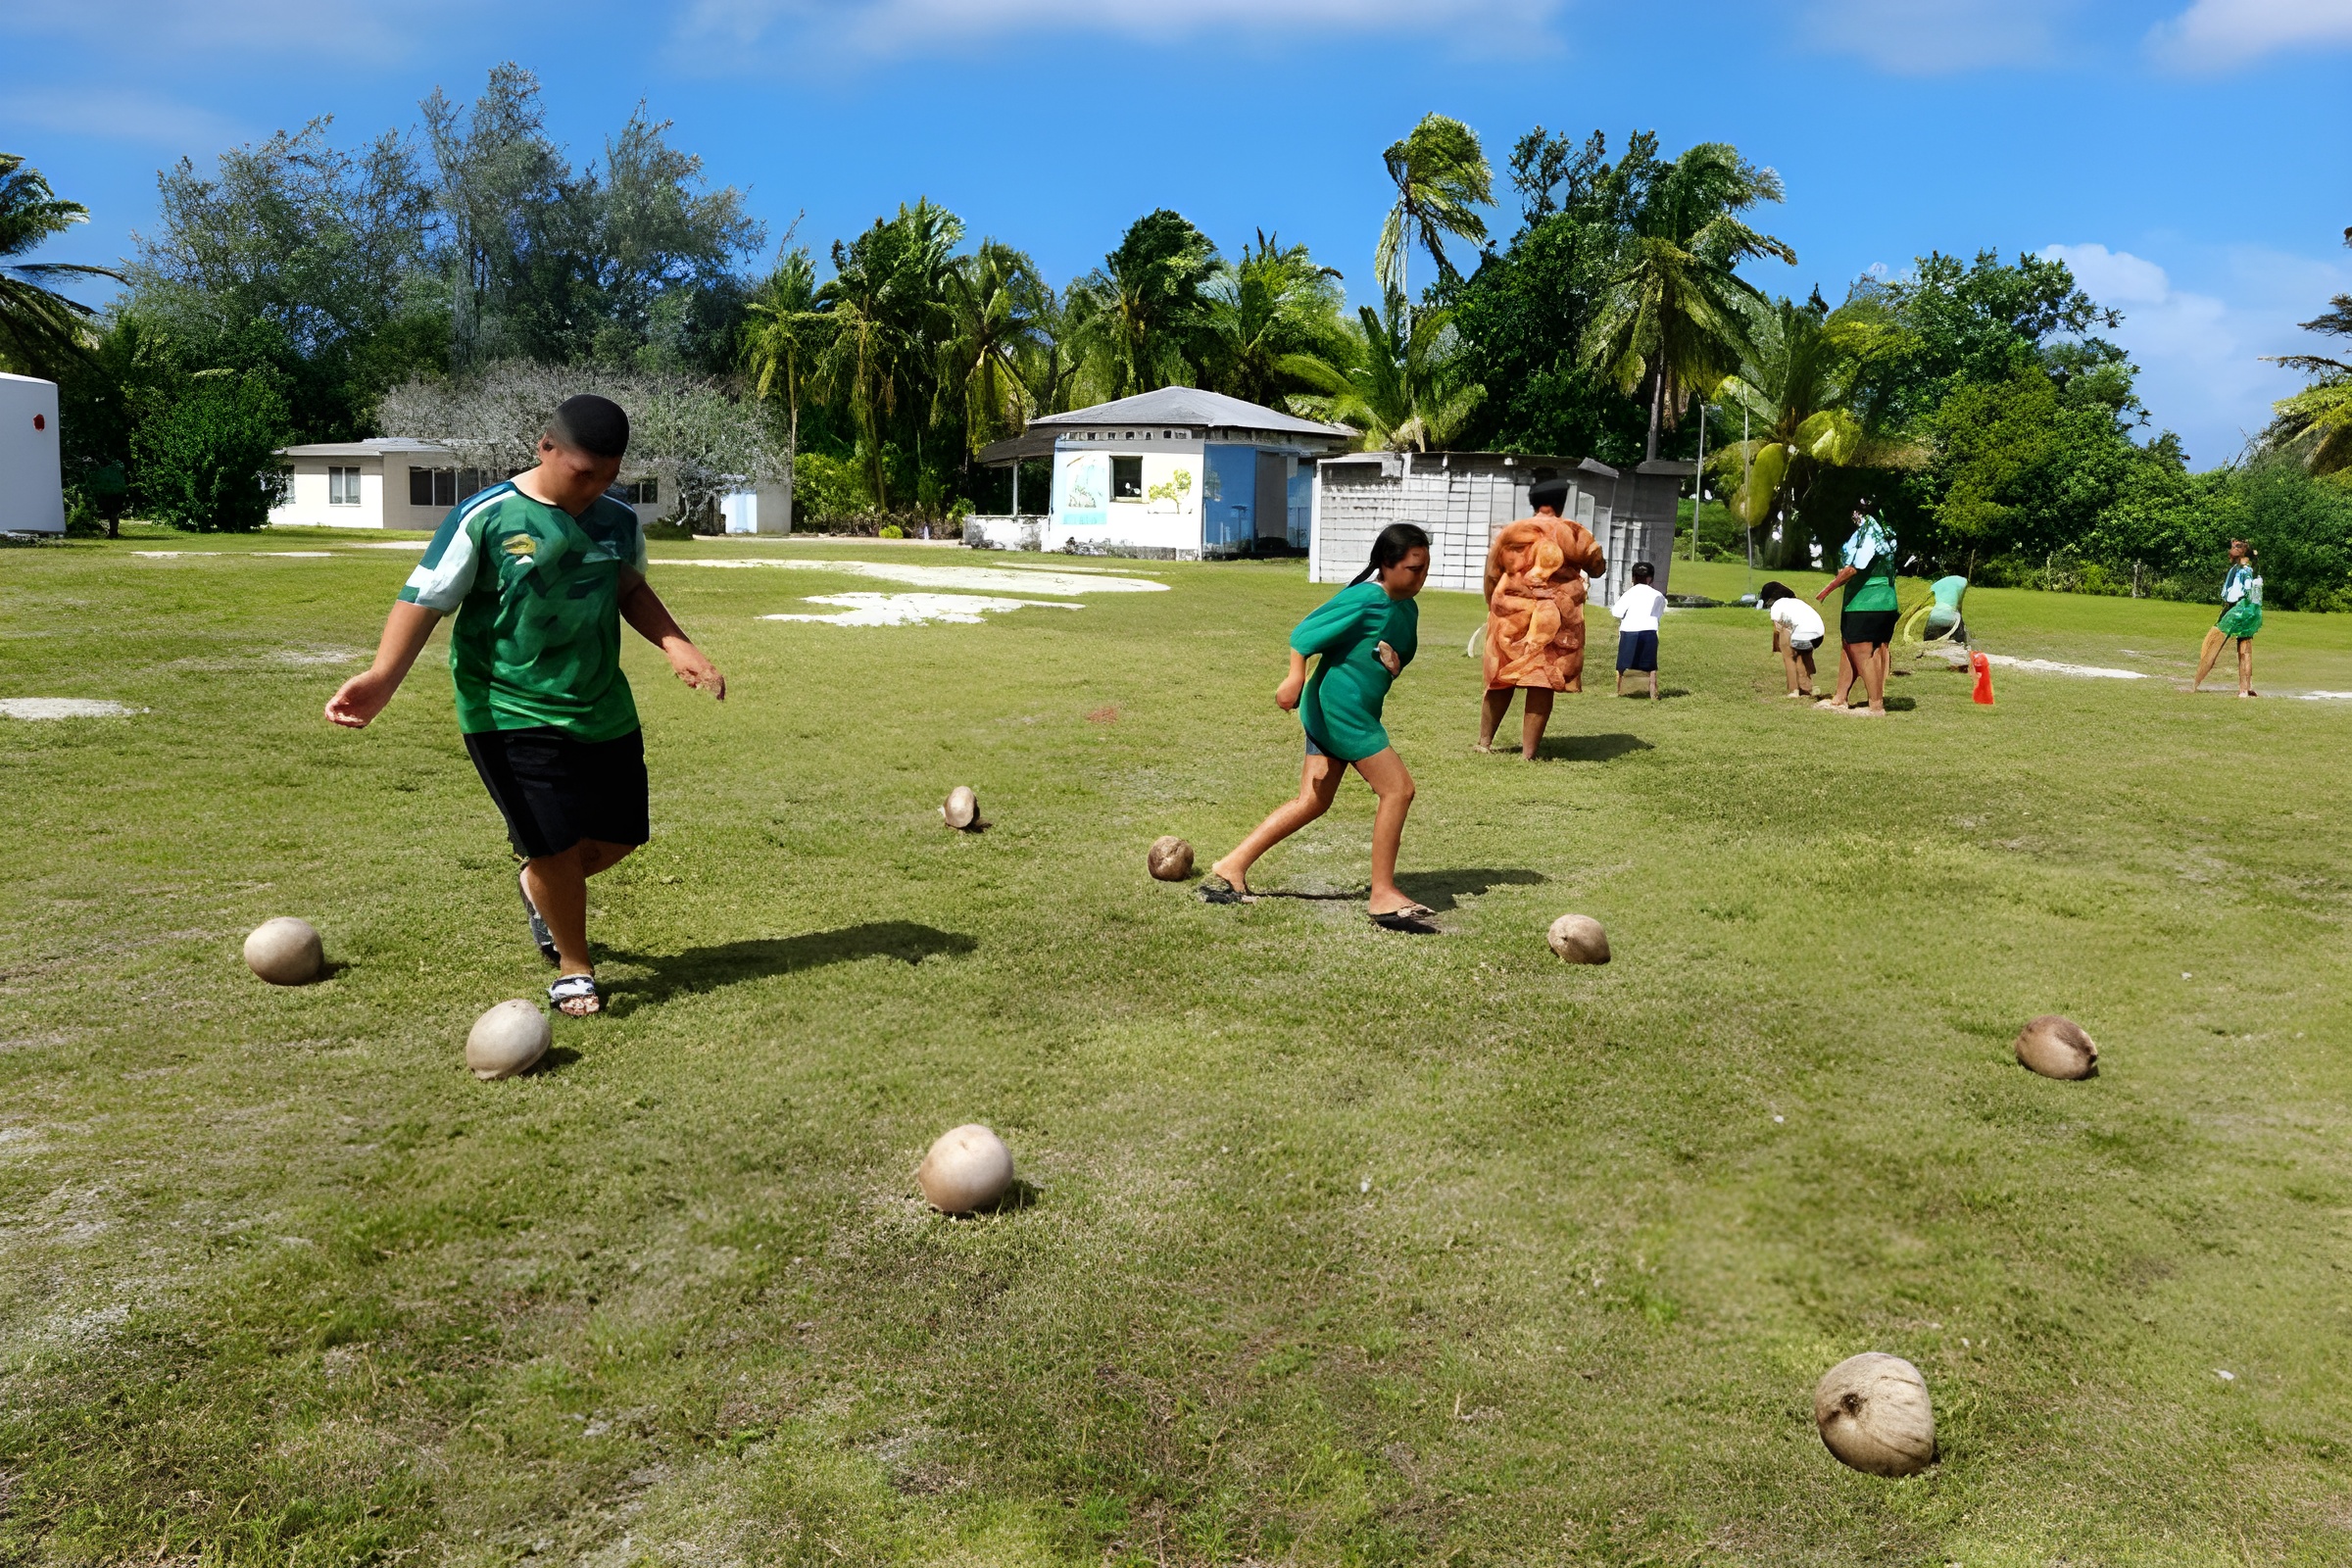 Cook island children play football